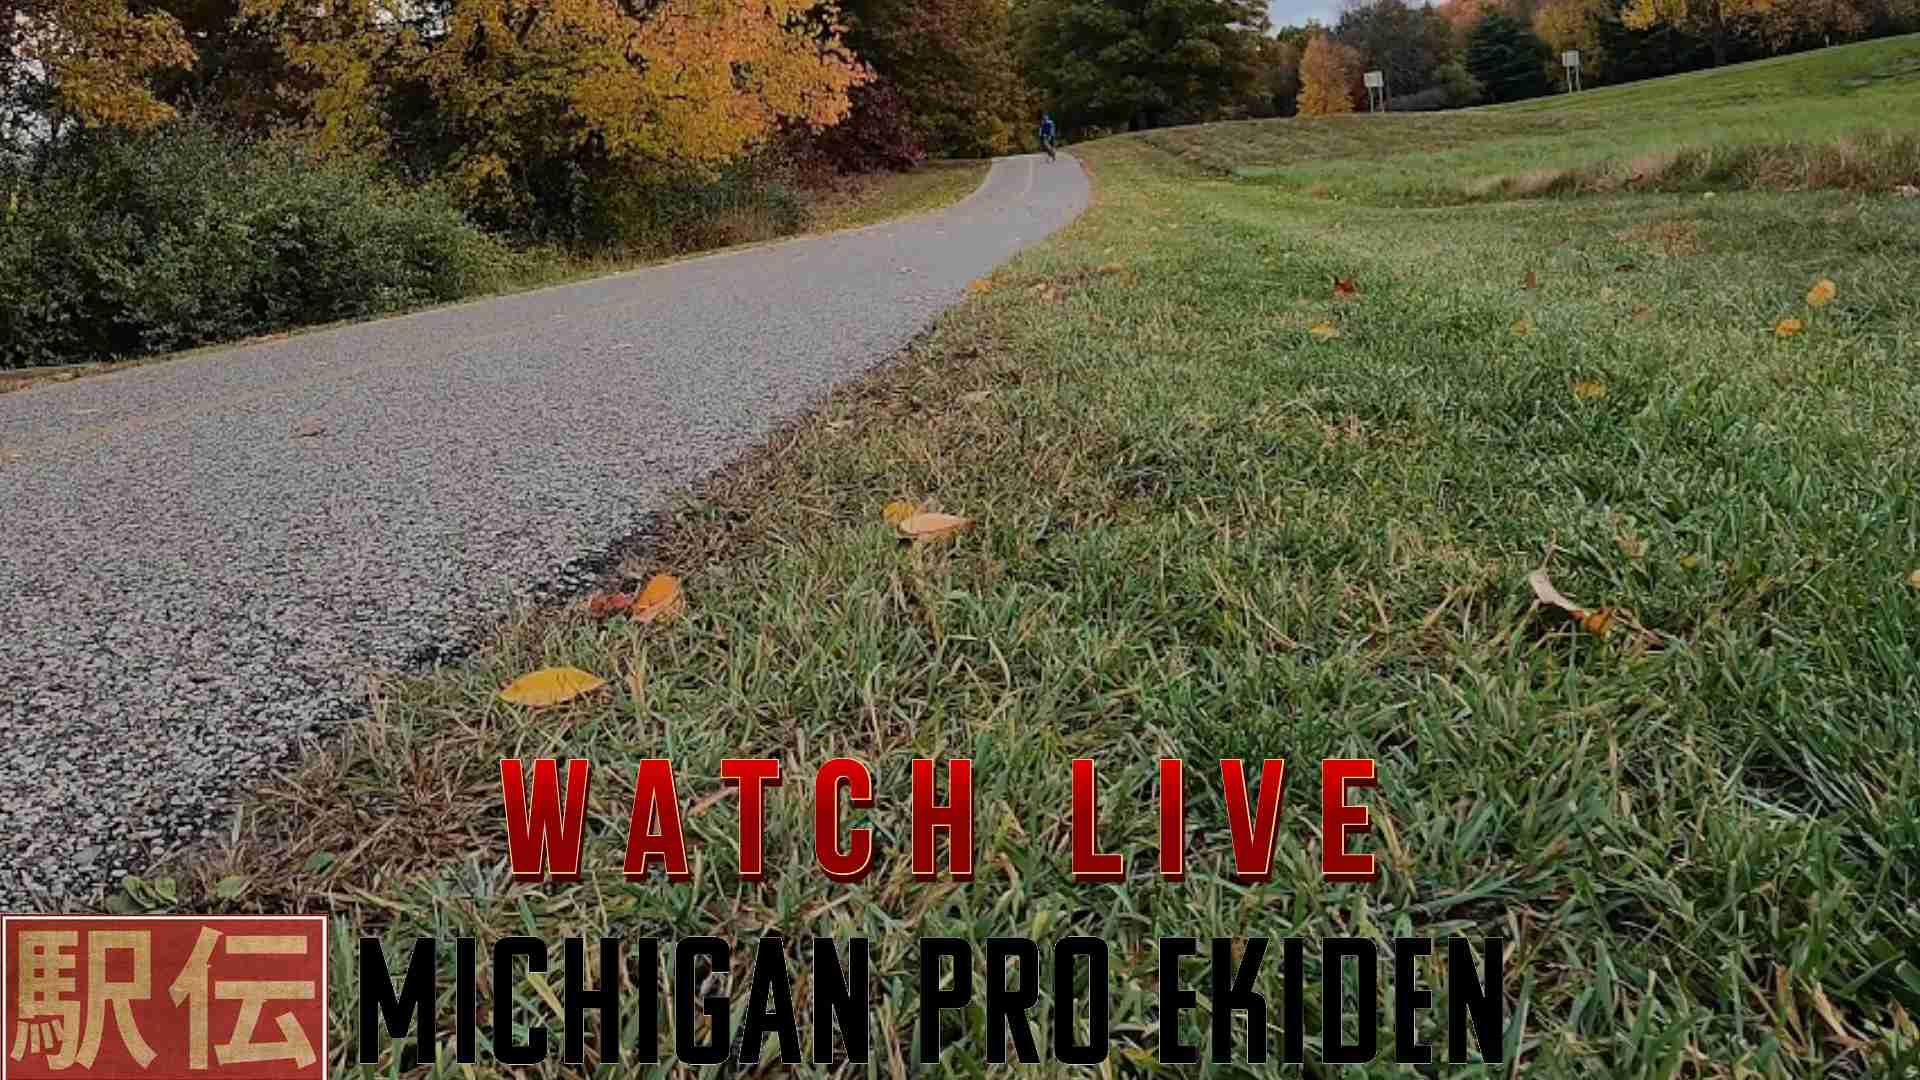 How to watch the 2021 Michigan Pro Ekiden live stream?